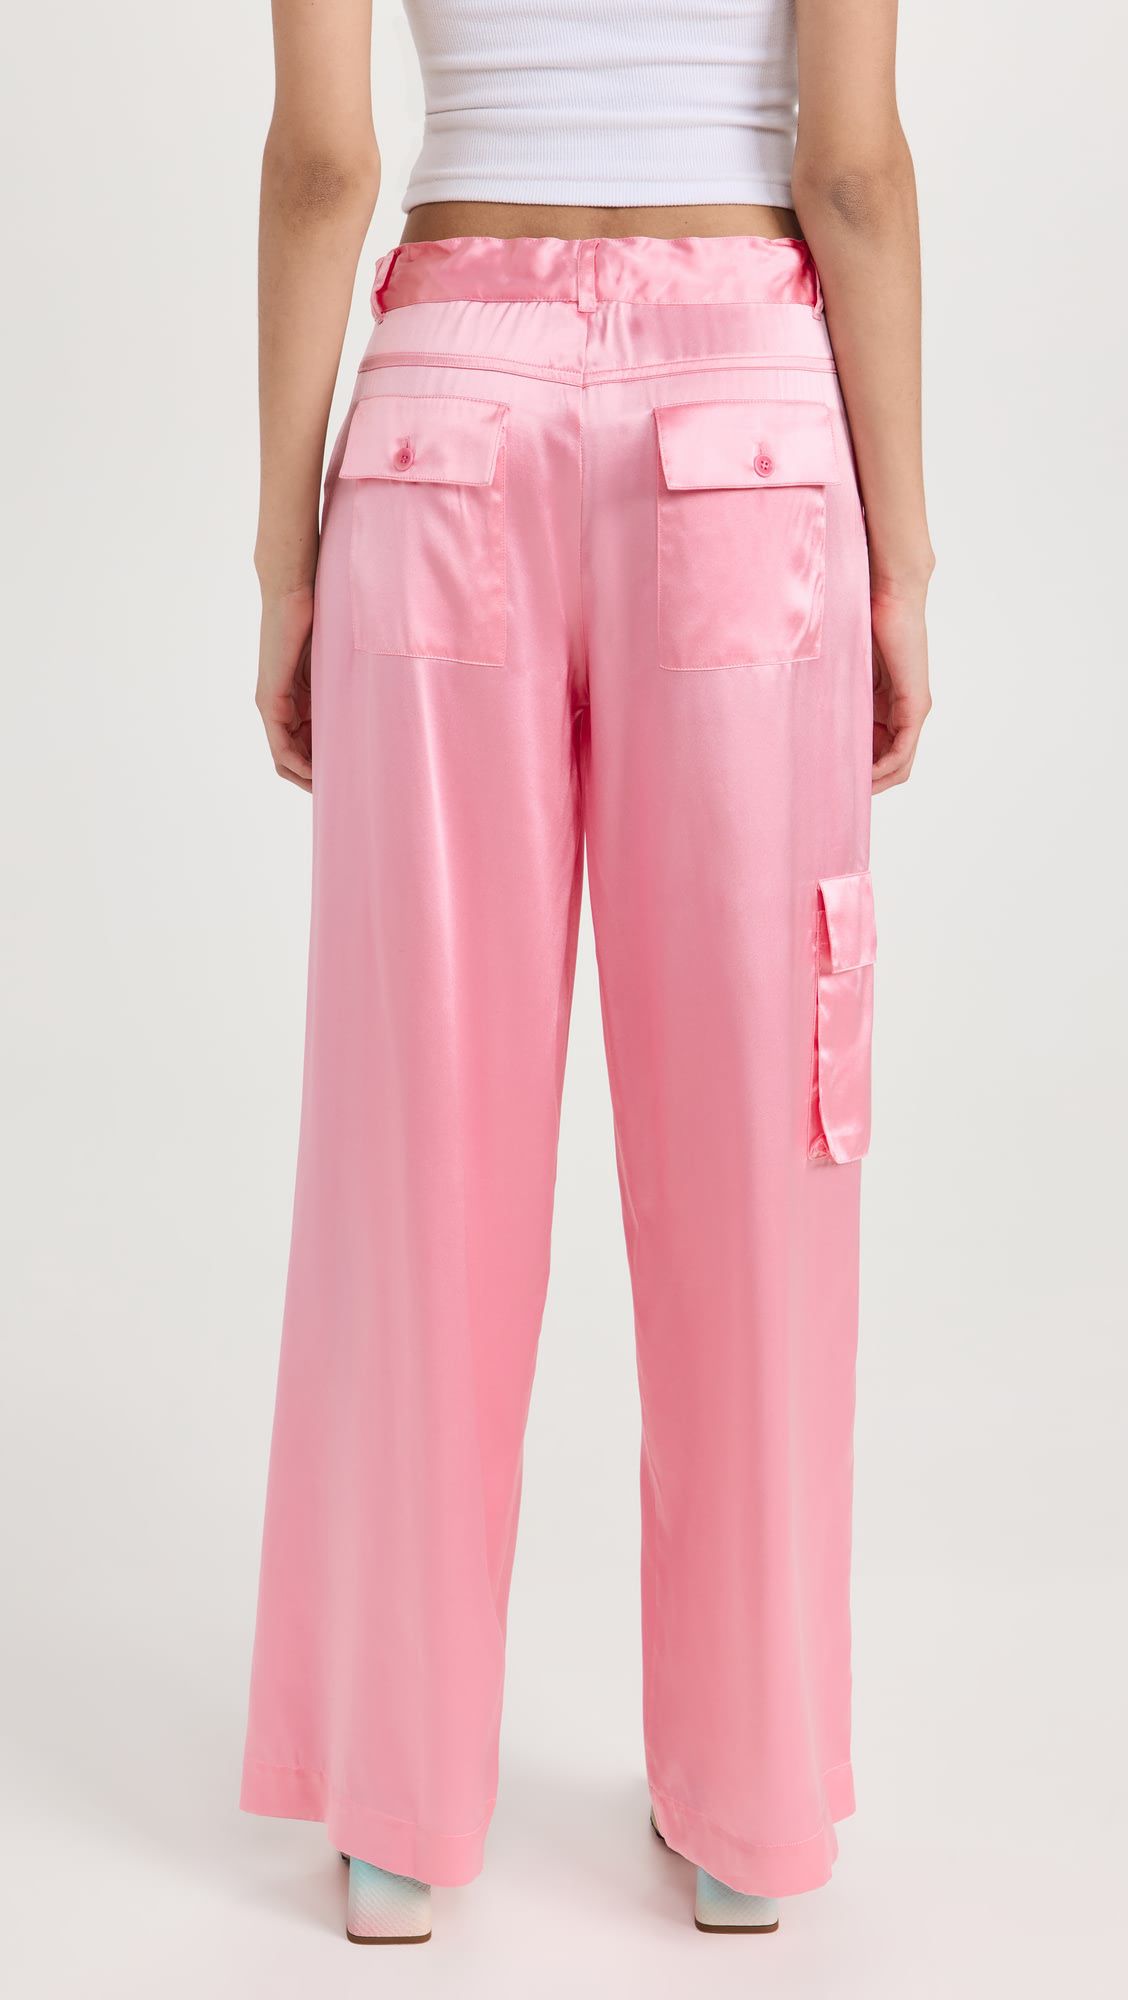 Made in China casual formal fashion pink satin loose pantsy